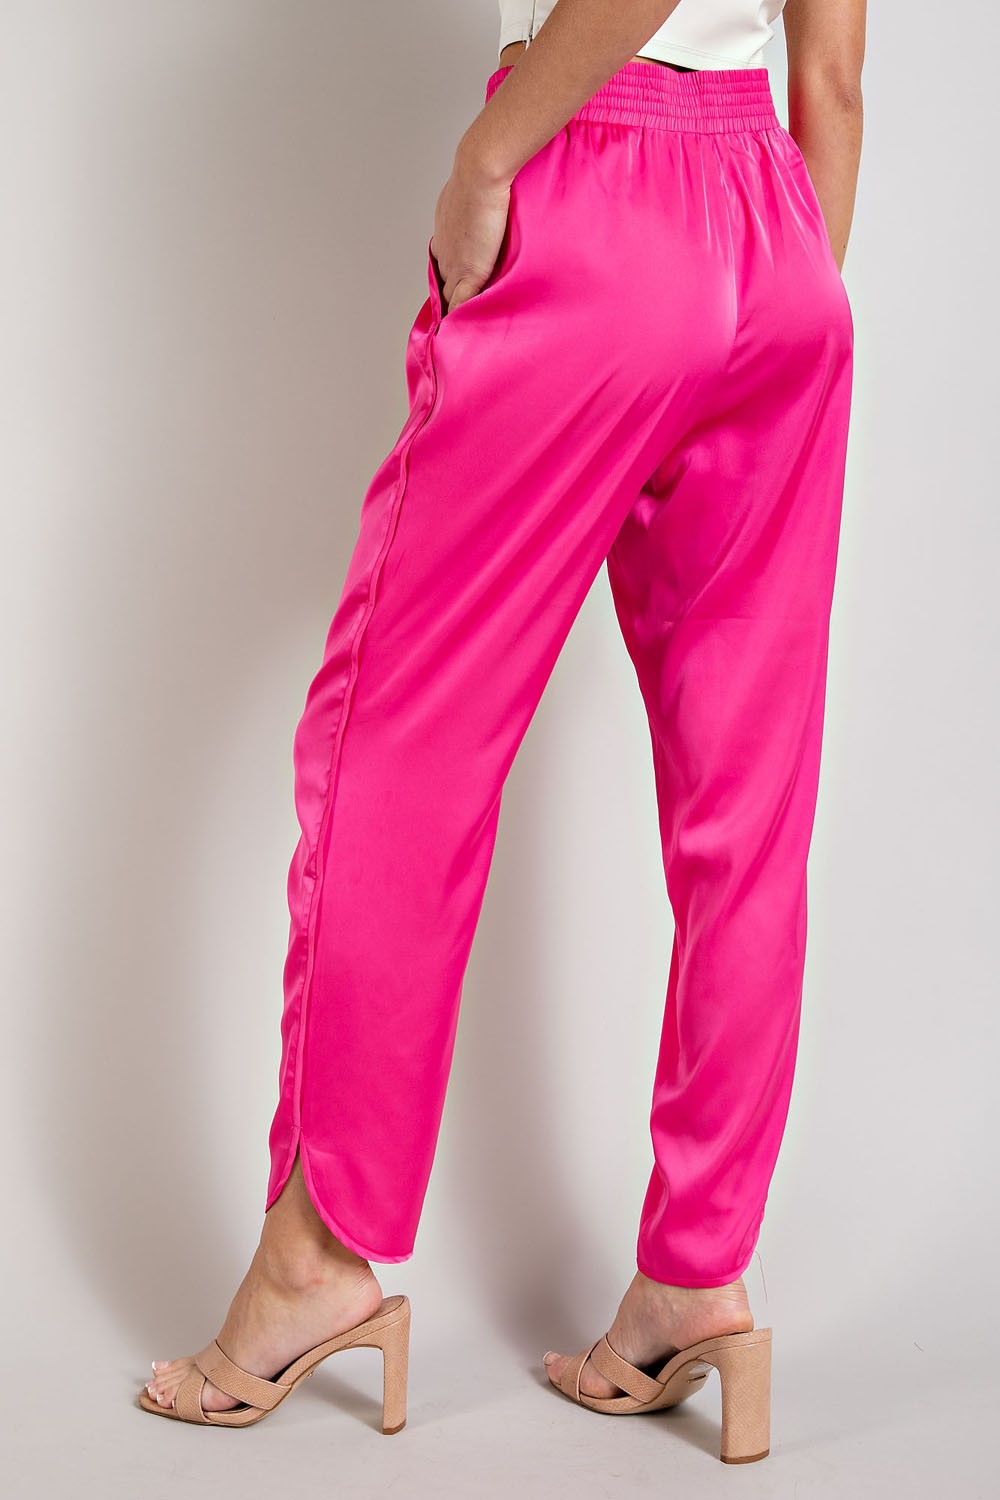 Hot Pink Smocked Satin Pants